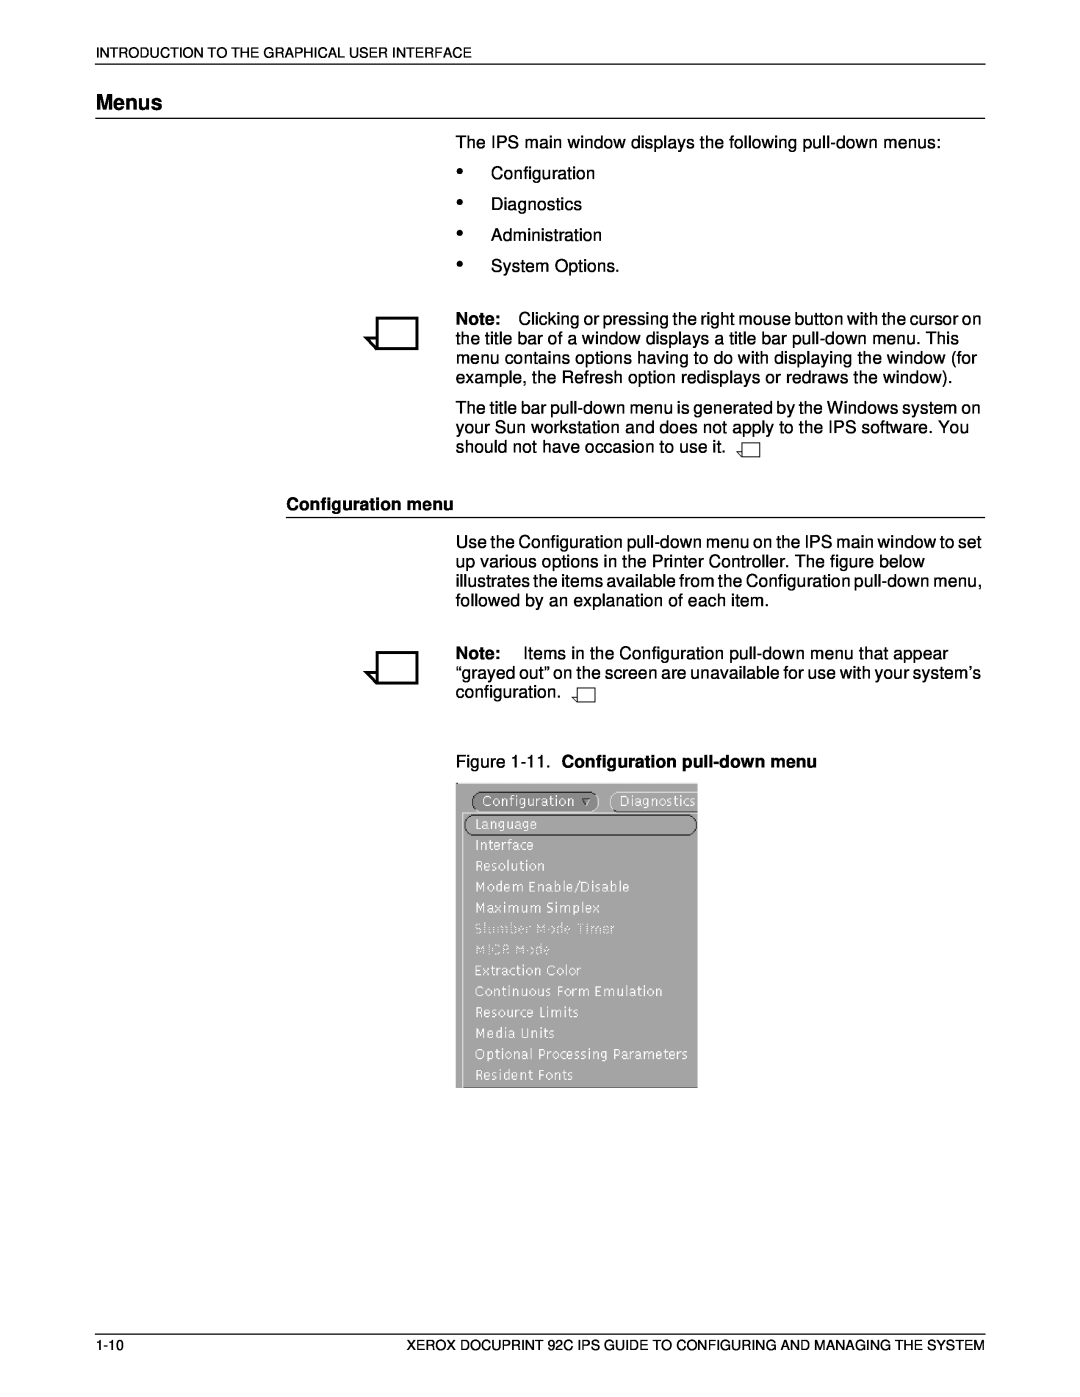 Xerox 92C IPS manual Menus, Configuration menu, 11. Configuration pull-down menu 